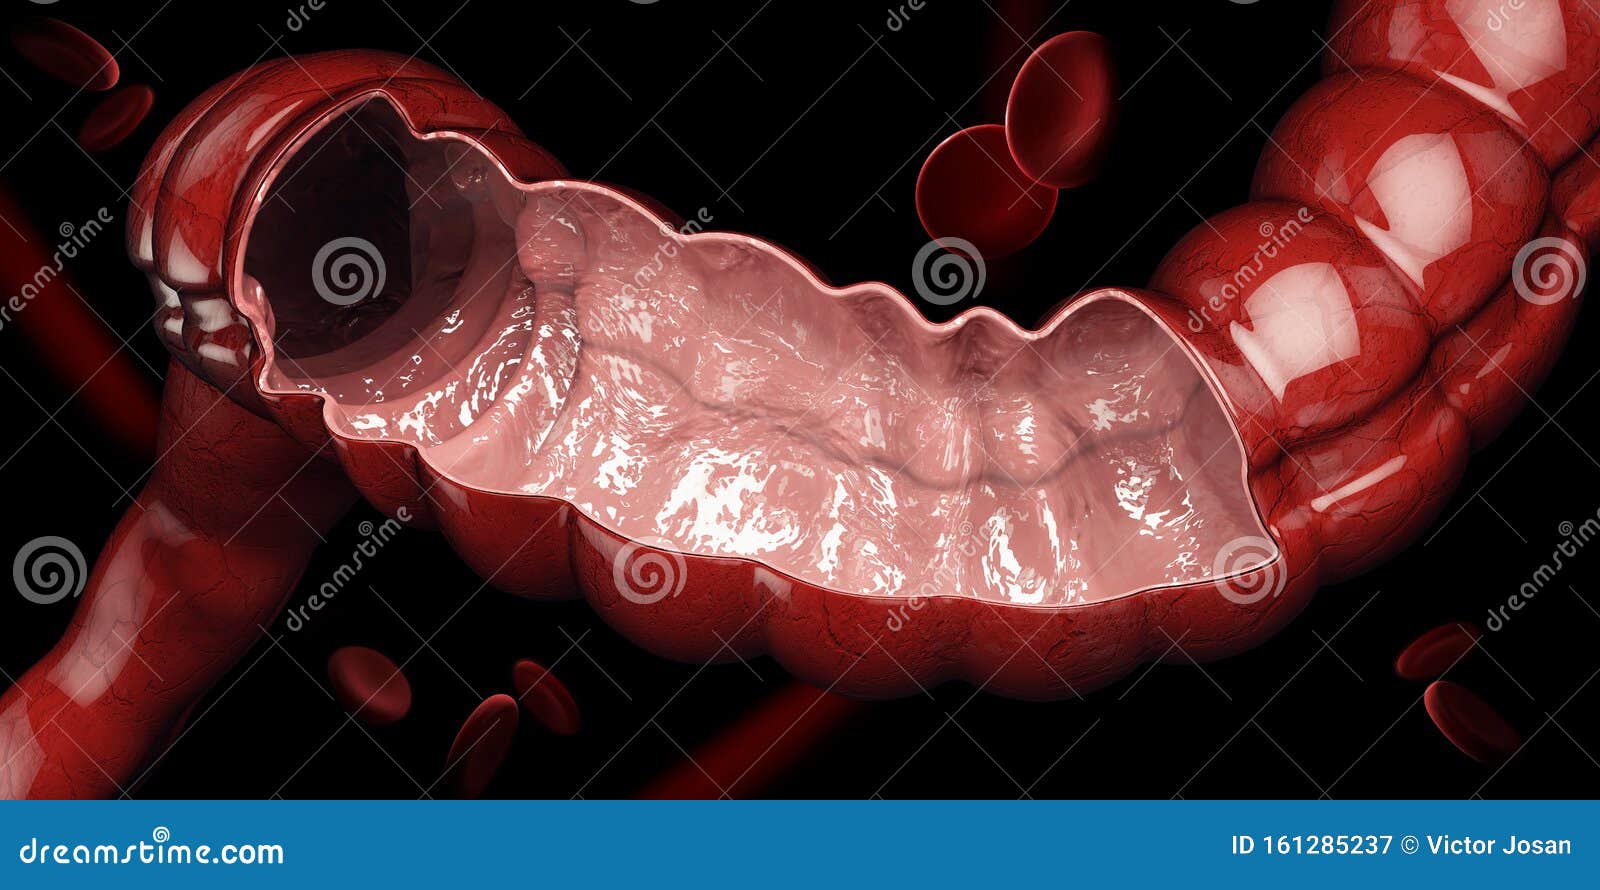 colon human intestine digestive system anatomy 3d illustration isolated icon